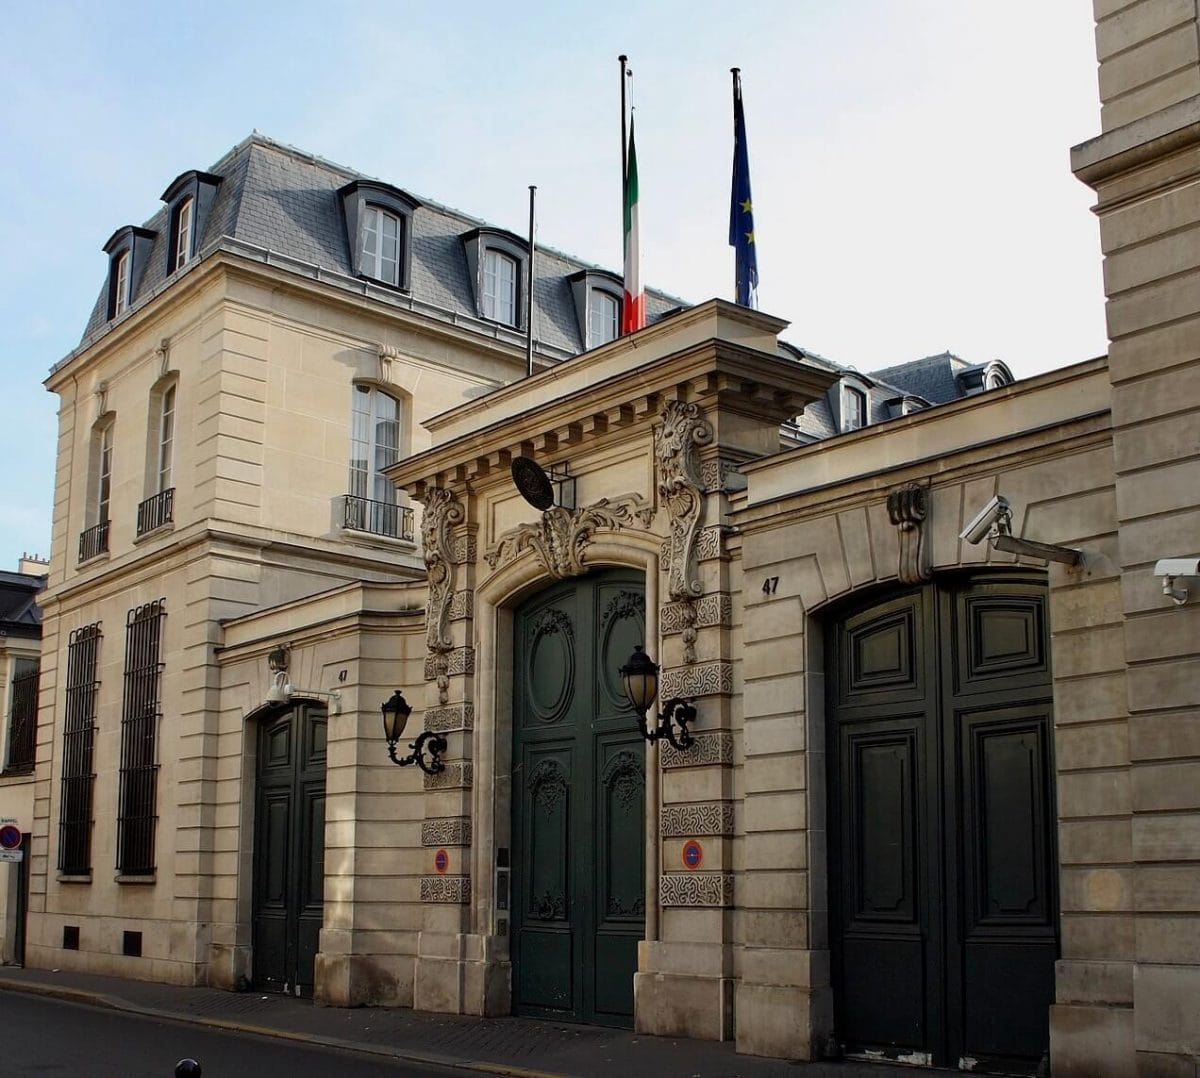 Italian Embassy Hotel de la Rochefoucauld-Doudeauville in Paris (Reinhardhauke / CC BY-SA 3.0)